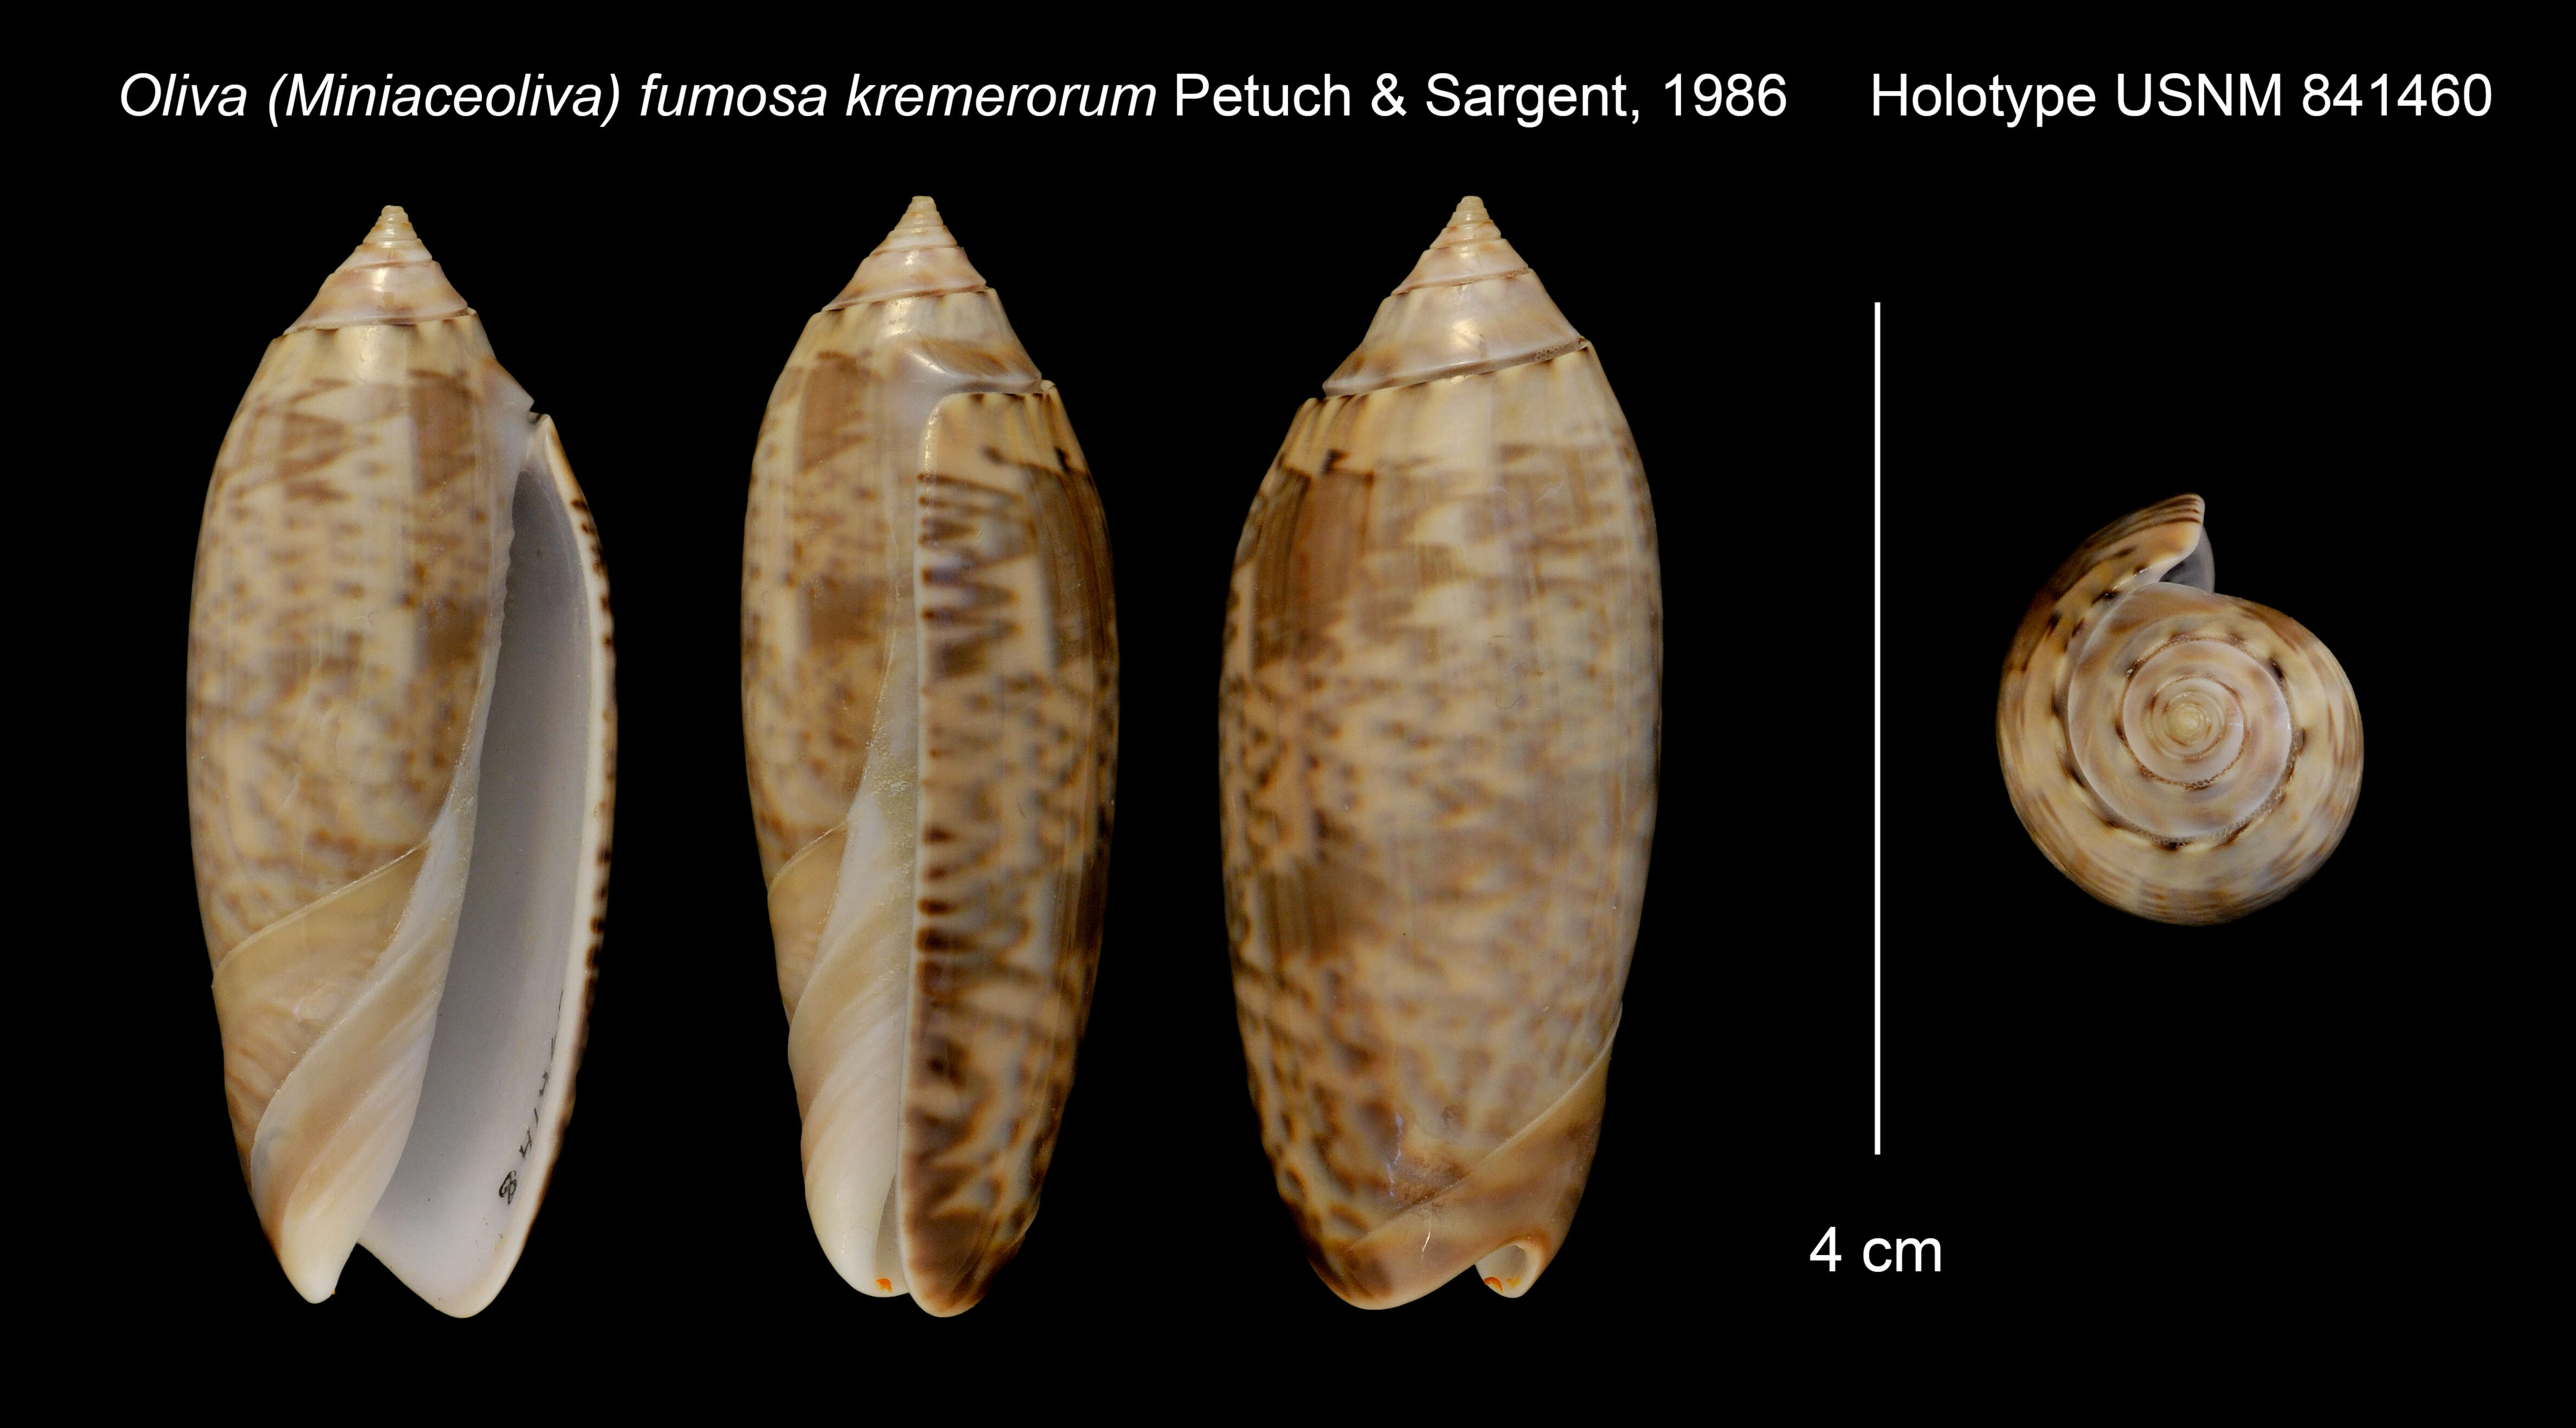 Image of Oliva fumosa kremerorum Petuch & Sargent 1986